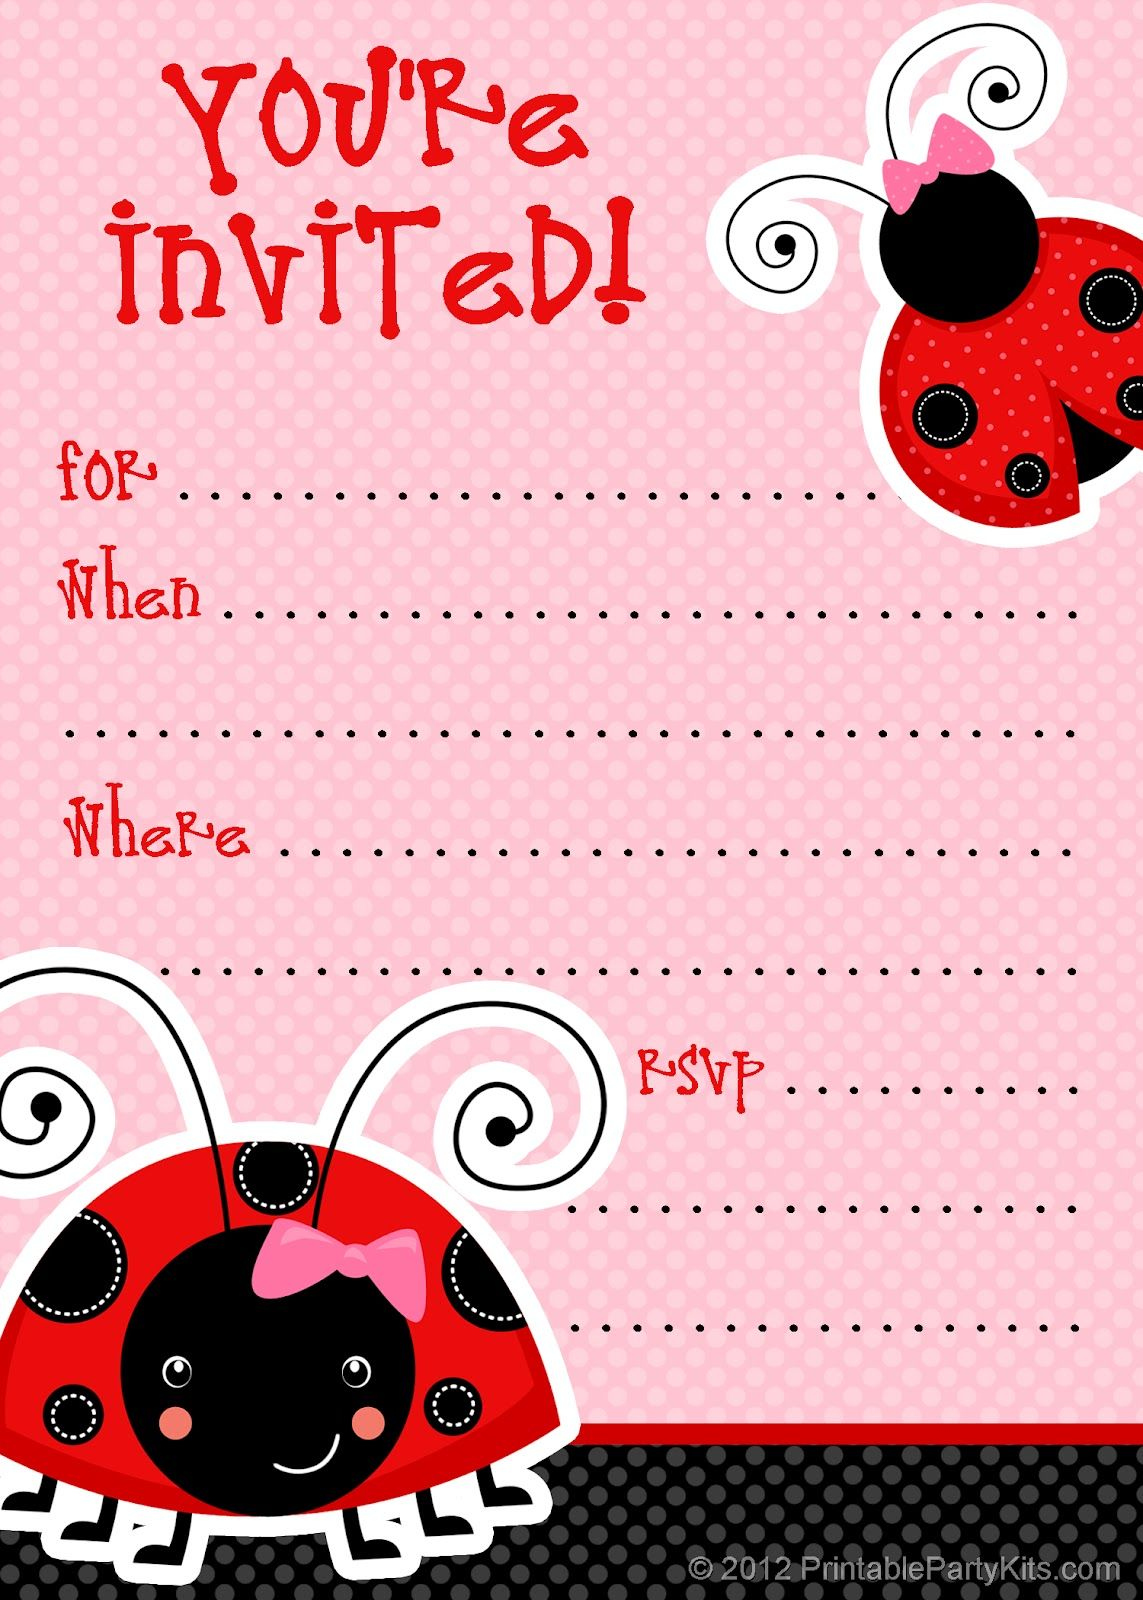 Free Printable Party Invitations: Free Ladybug Invite Template with regard to Free Printable Ladybug Baby Shower Invitations Templates